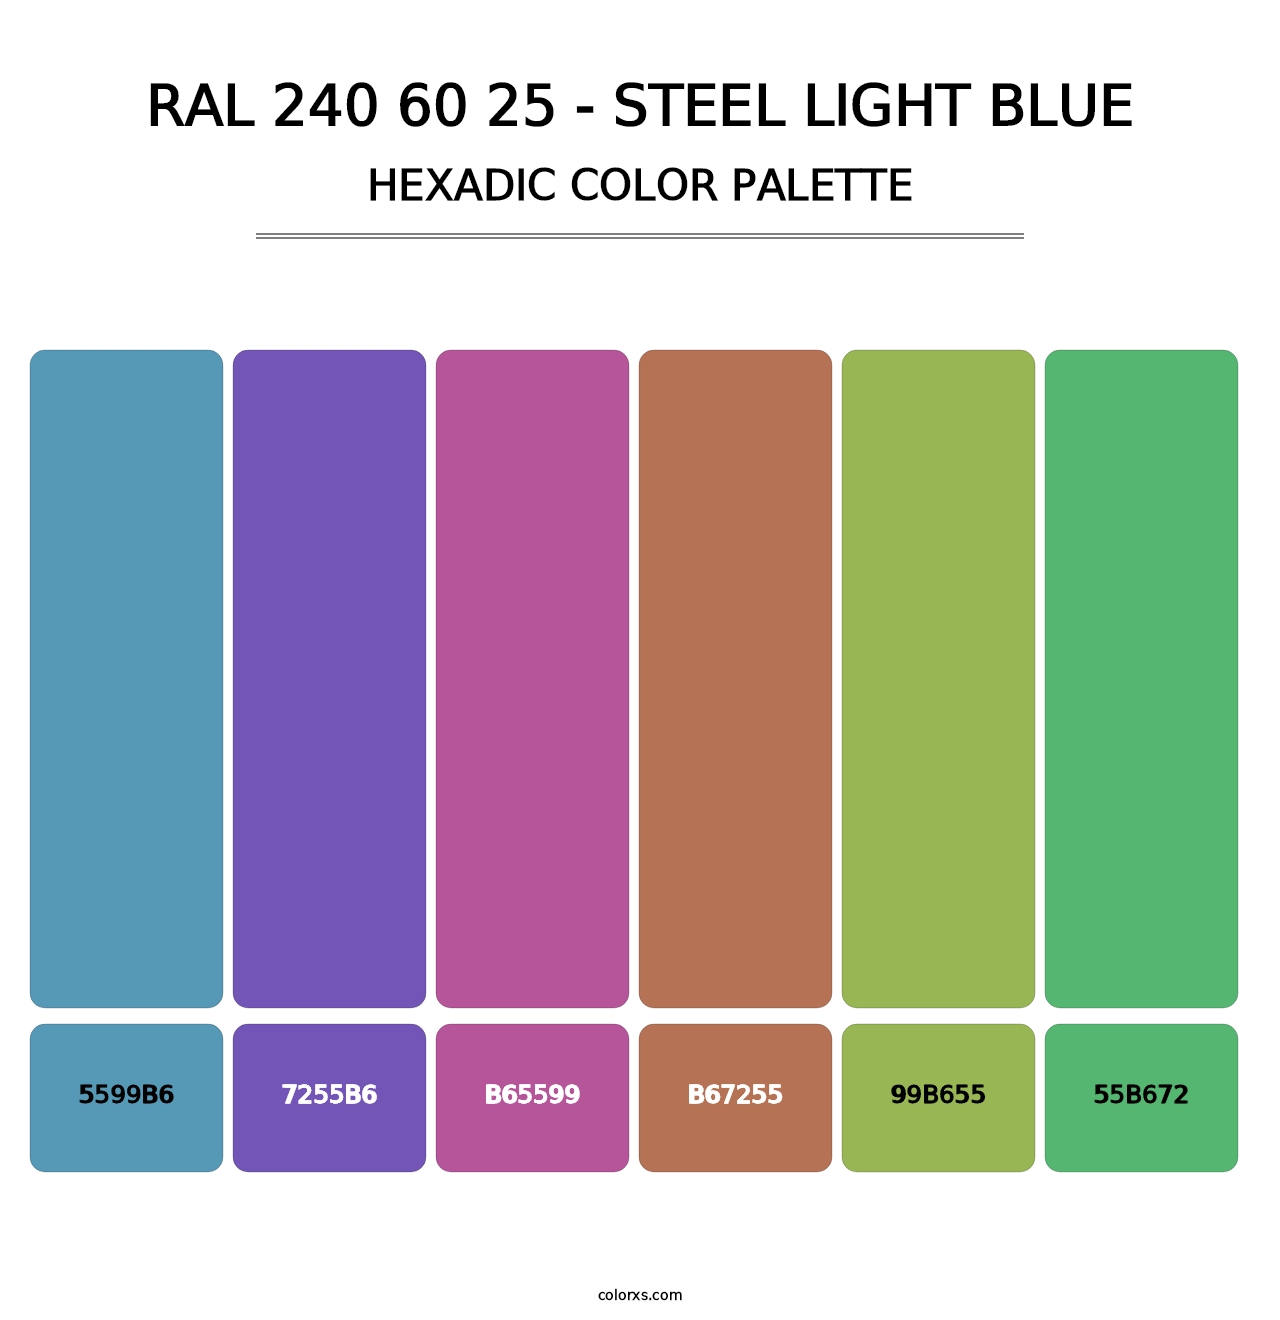 RAL 240 60 25 - Steel Light Blue - Hexadic Color Palette